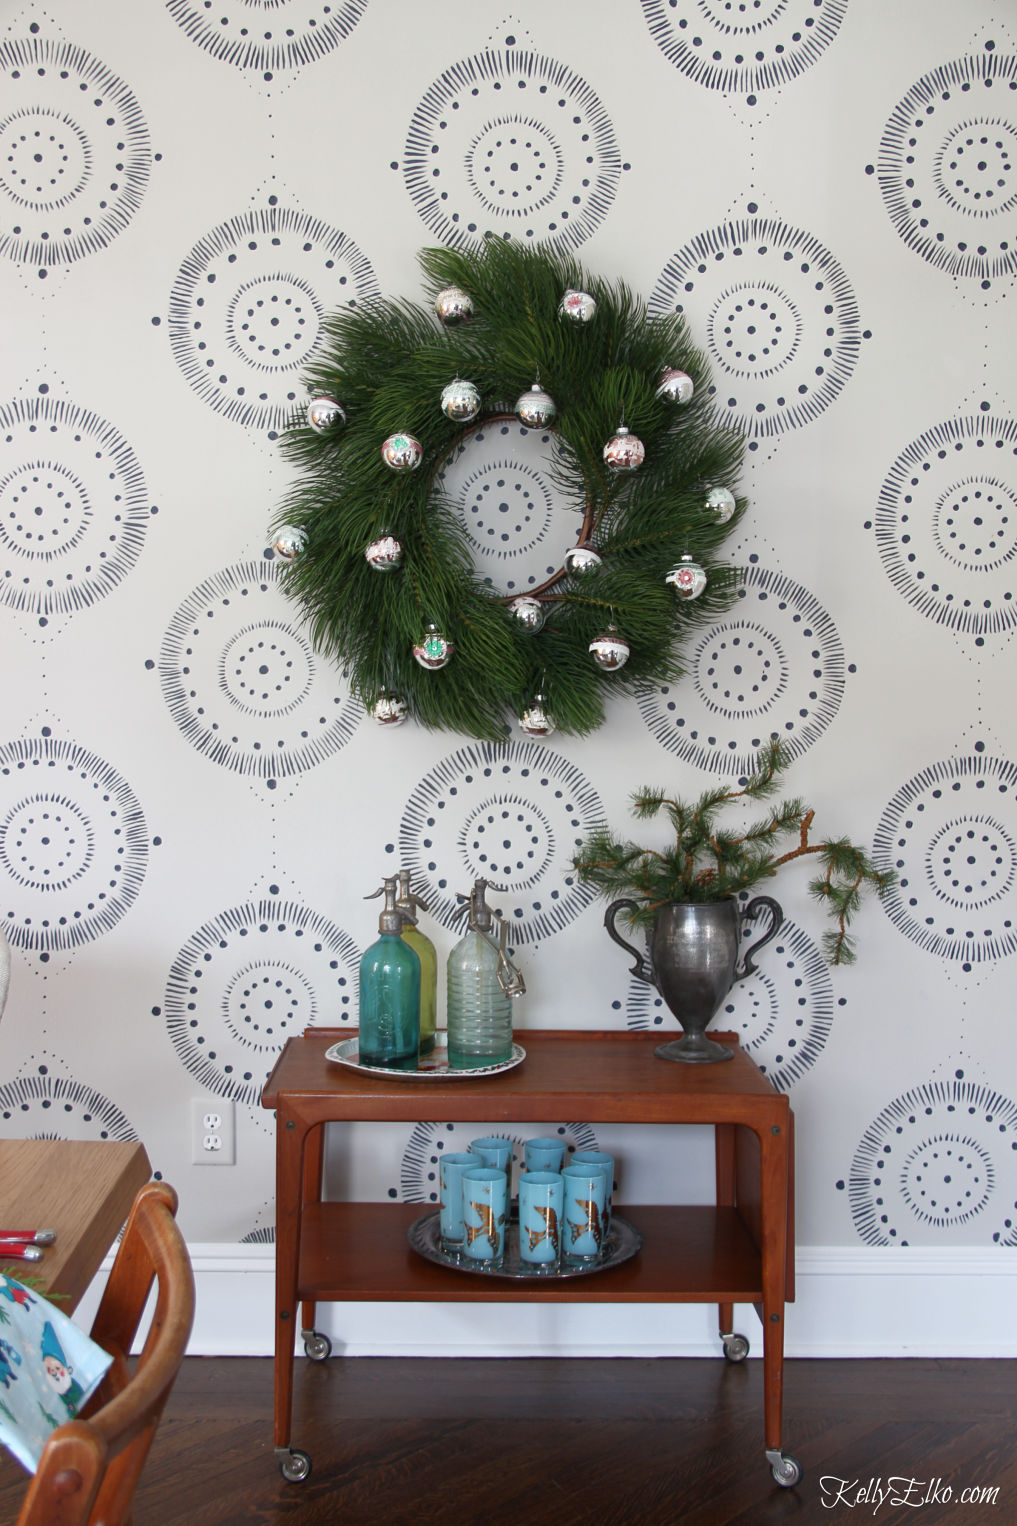 https://www.kellyelko.com/wp-content/uploads/2018/11/christmas-vintage-bar-car-wreath-shinhy-brite-ornaments-wall-mural.jpg